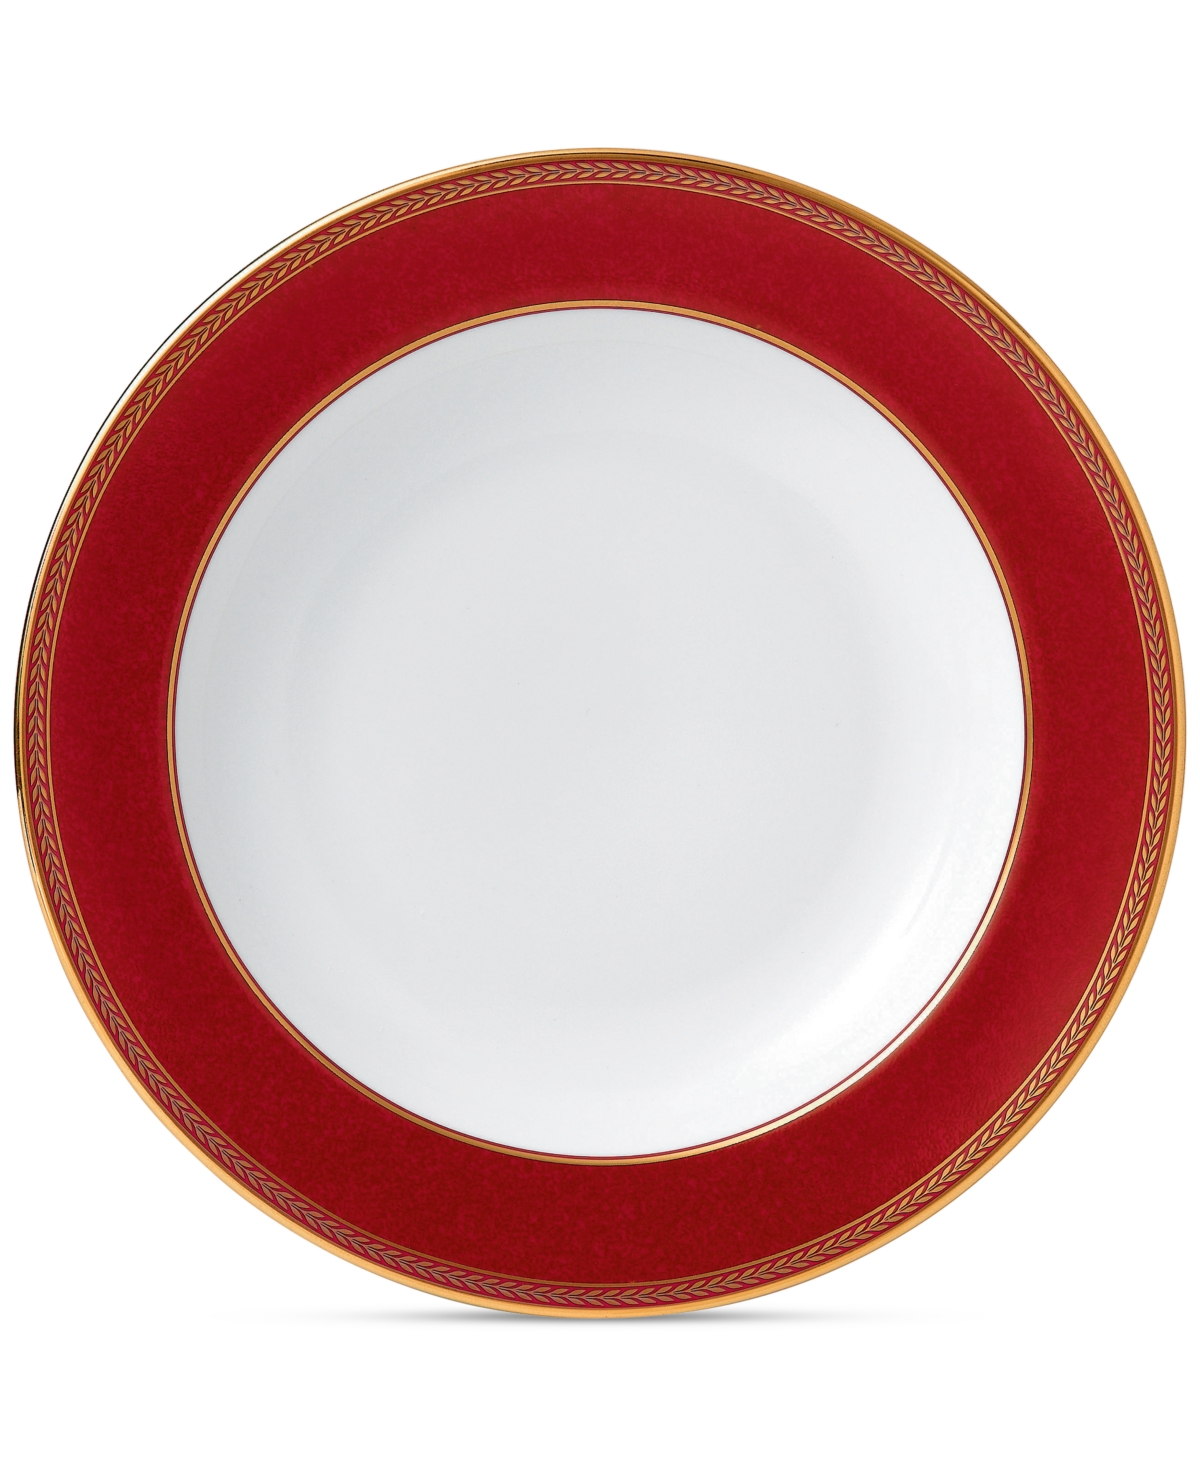 Wedgwood Renaissance Red Rim Soup Bowl In No Color